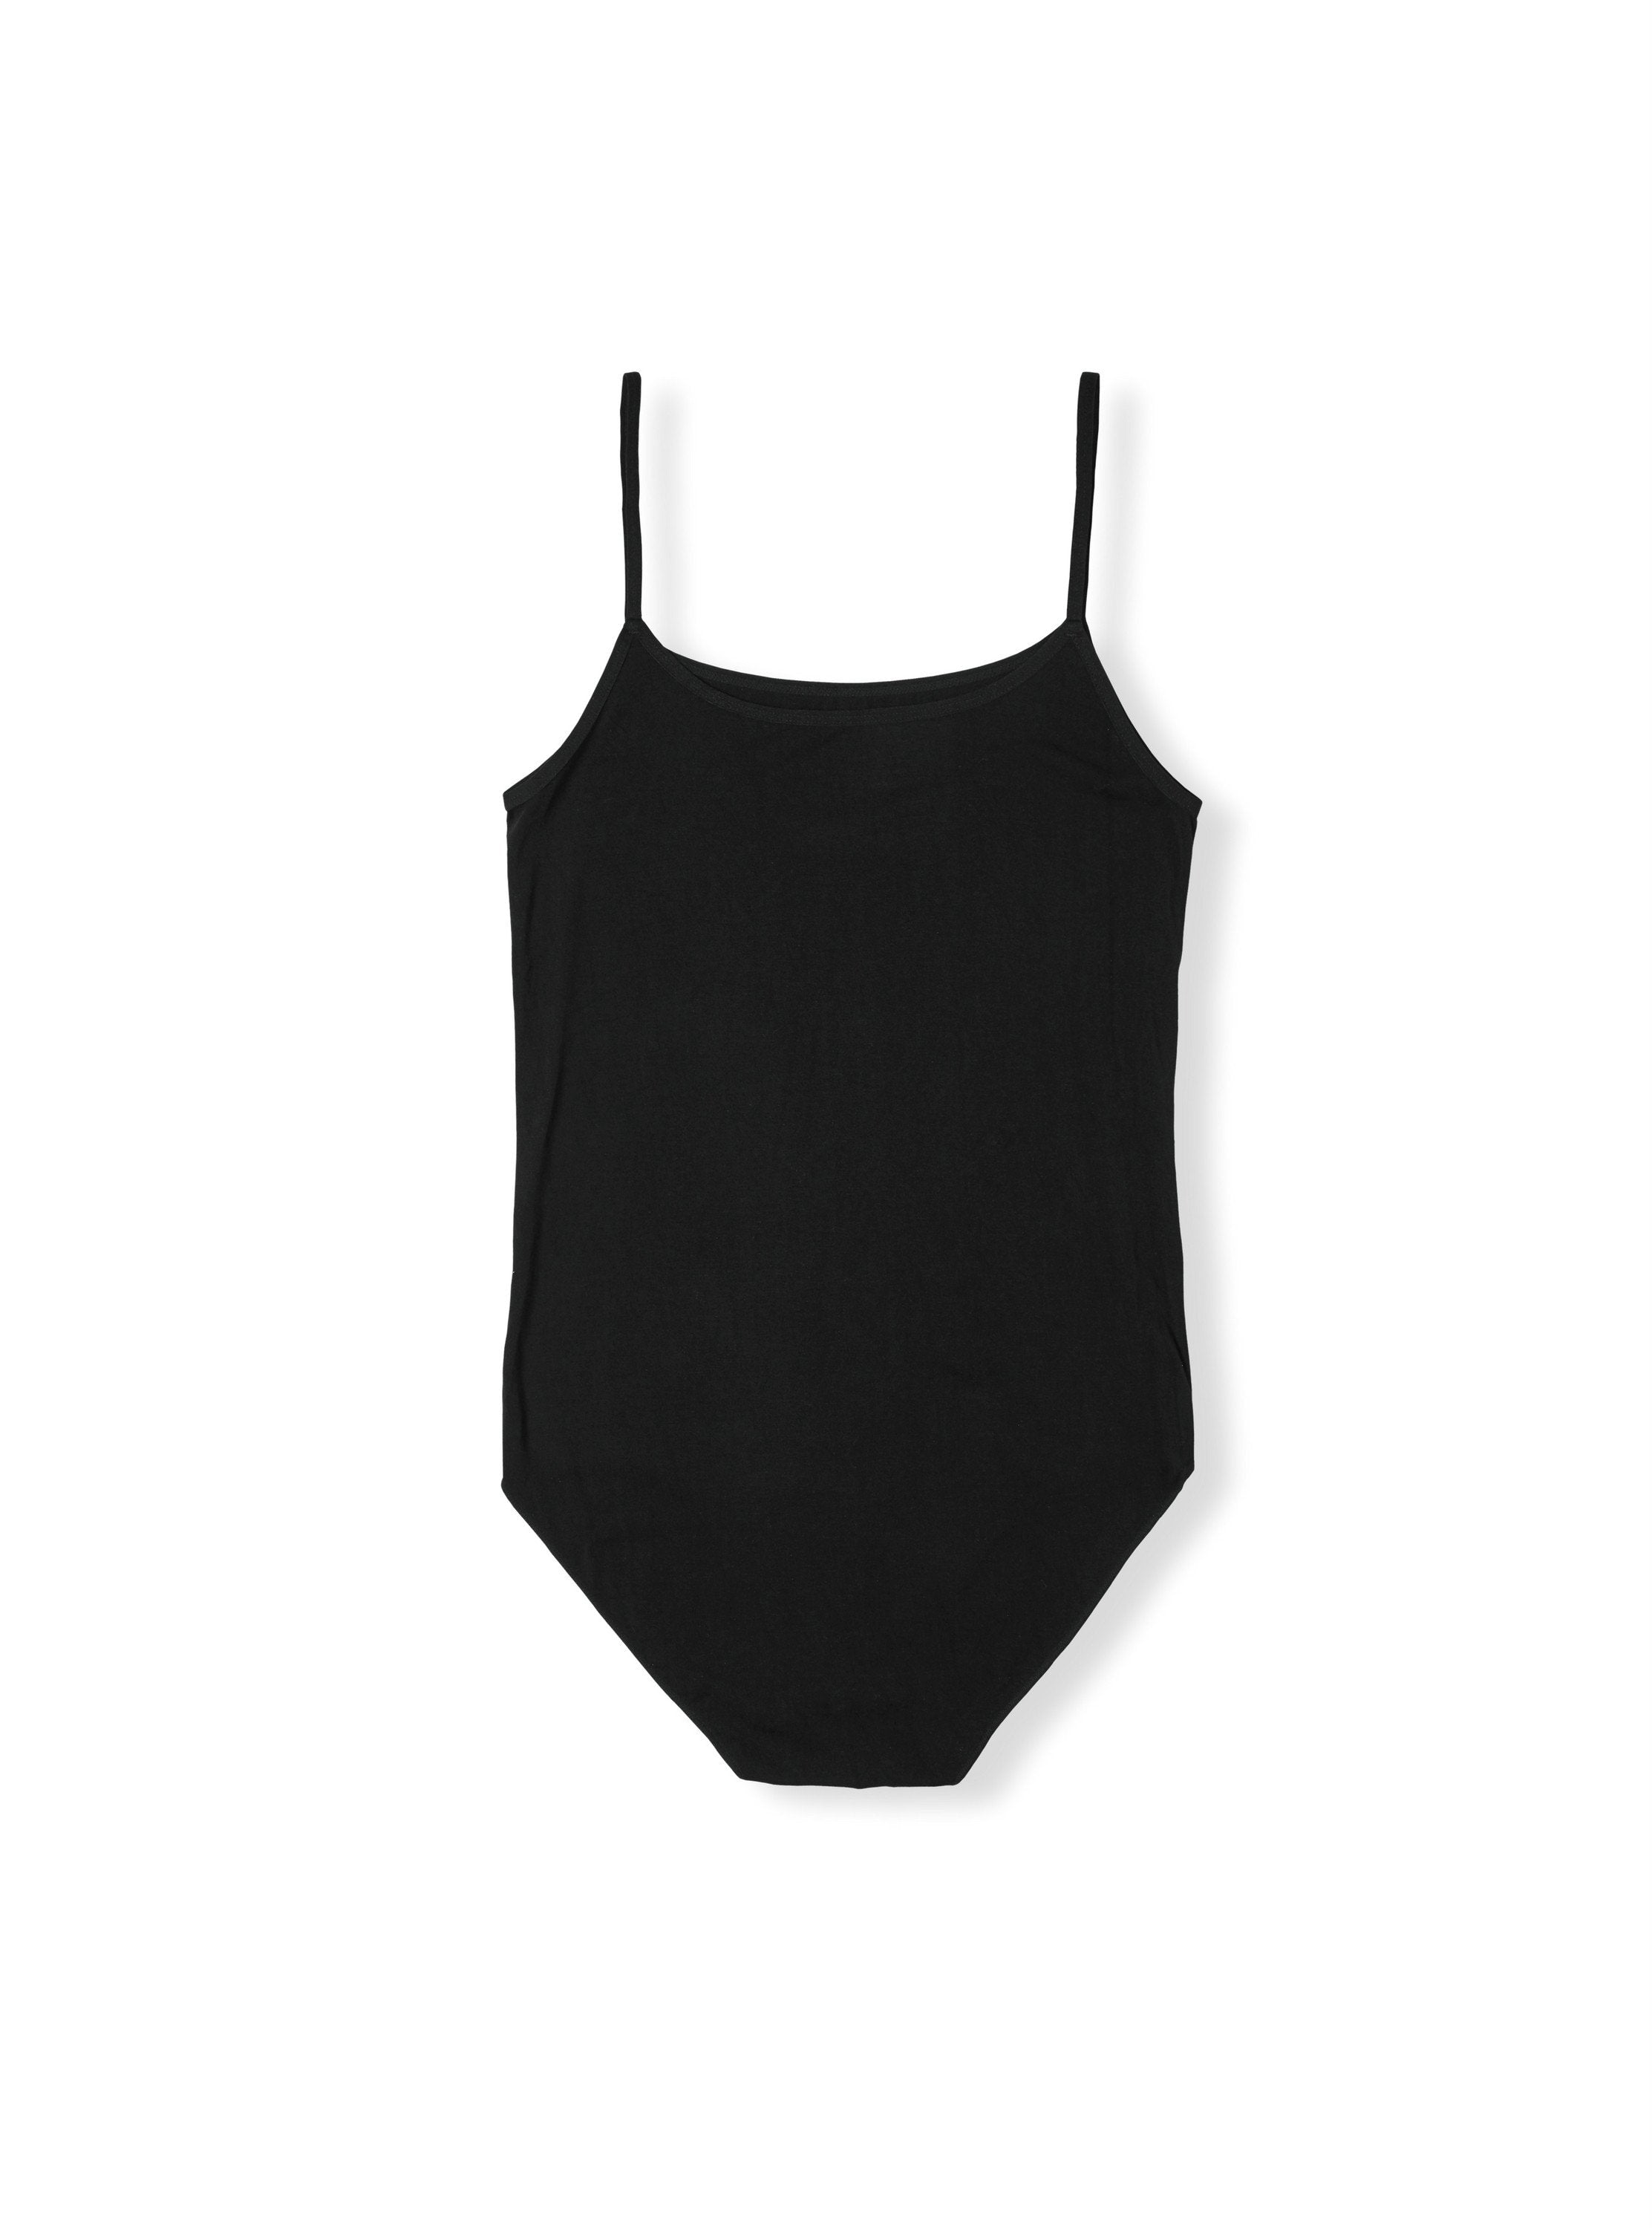 Boody Body EcoWear Women's Cami Bodysuit – Snap Bottom Camisole